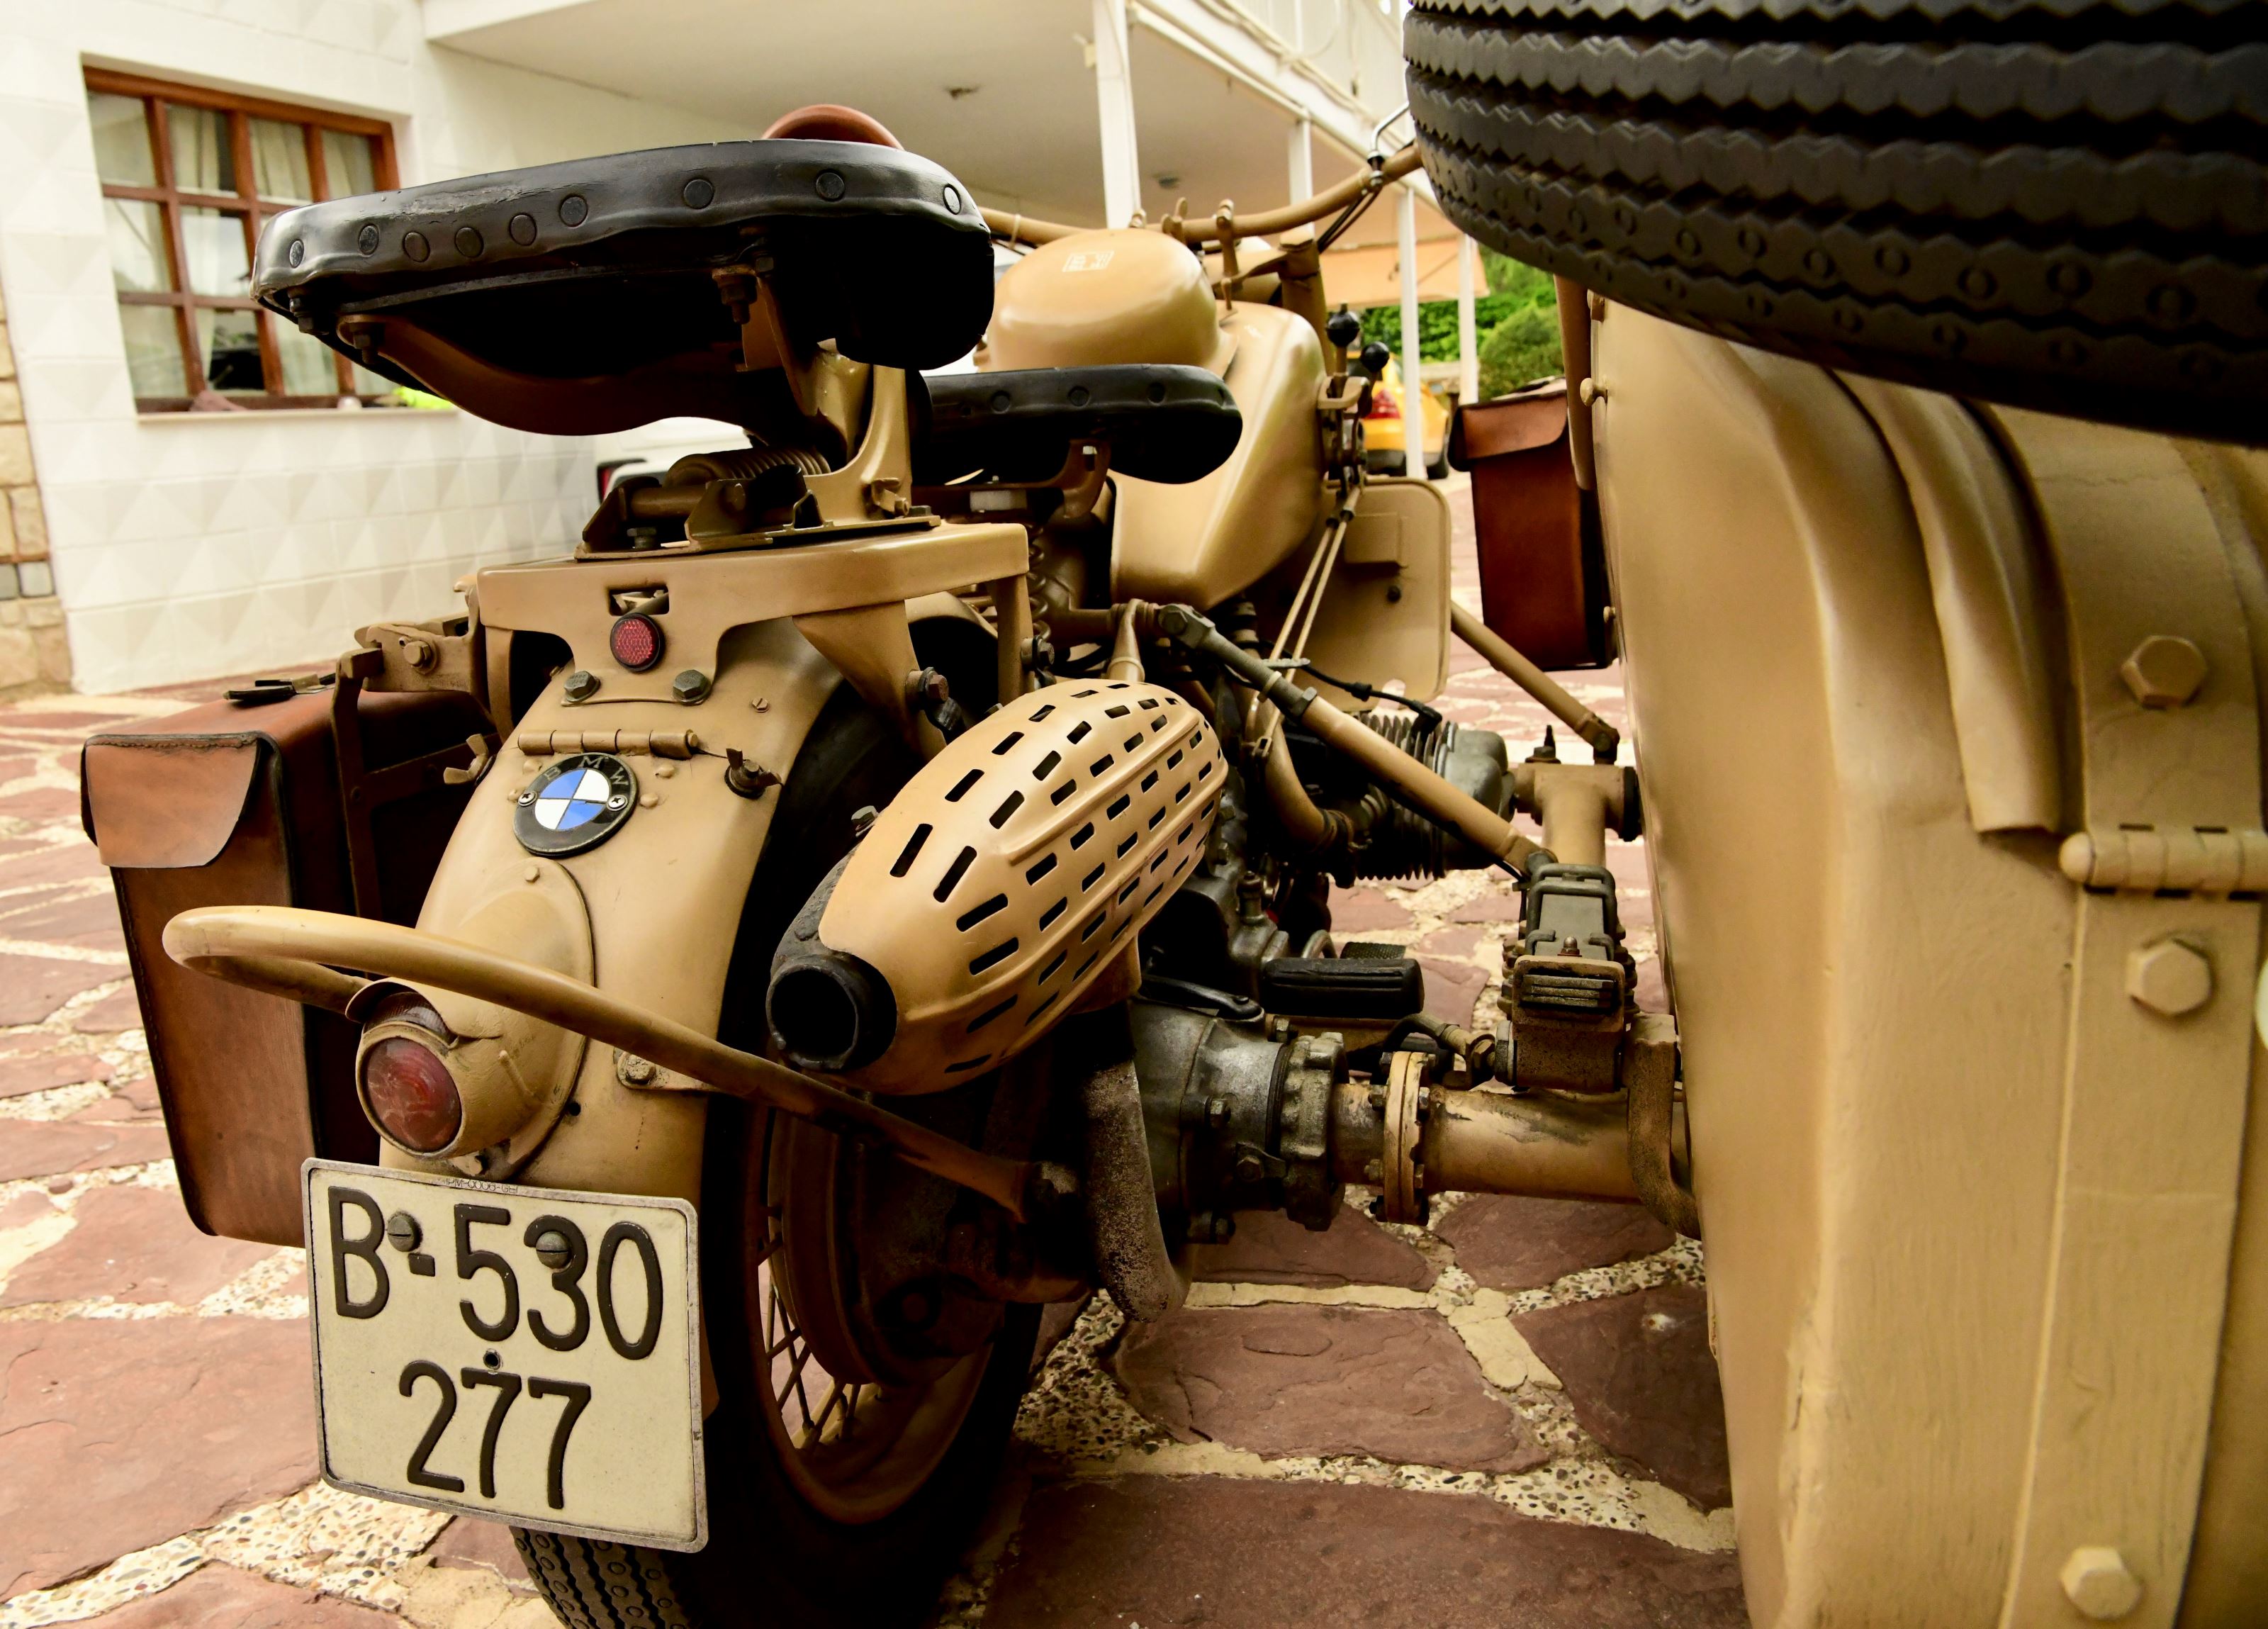 Bmw r75 750cc military motorcycle combination wehrmachtsgespann epbq5ovqqwrnmz4oafv1k